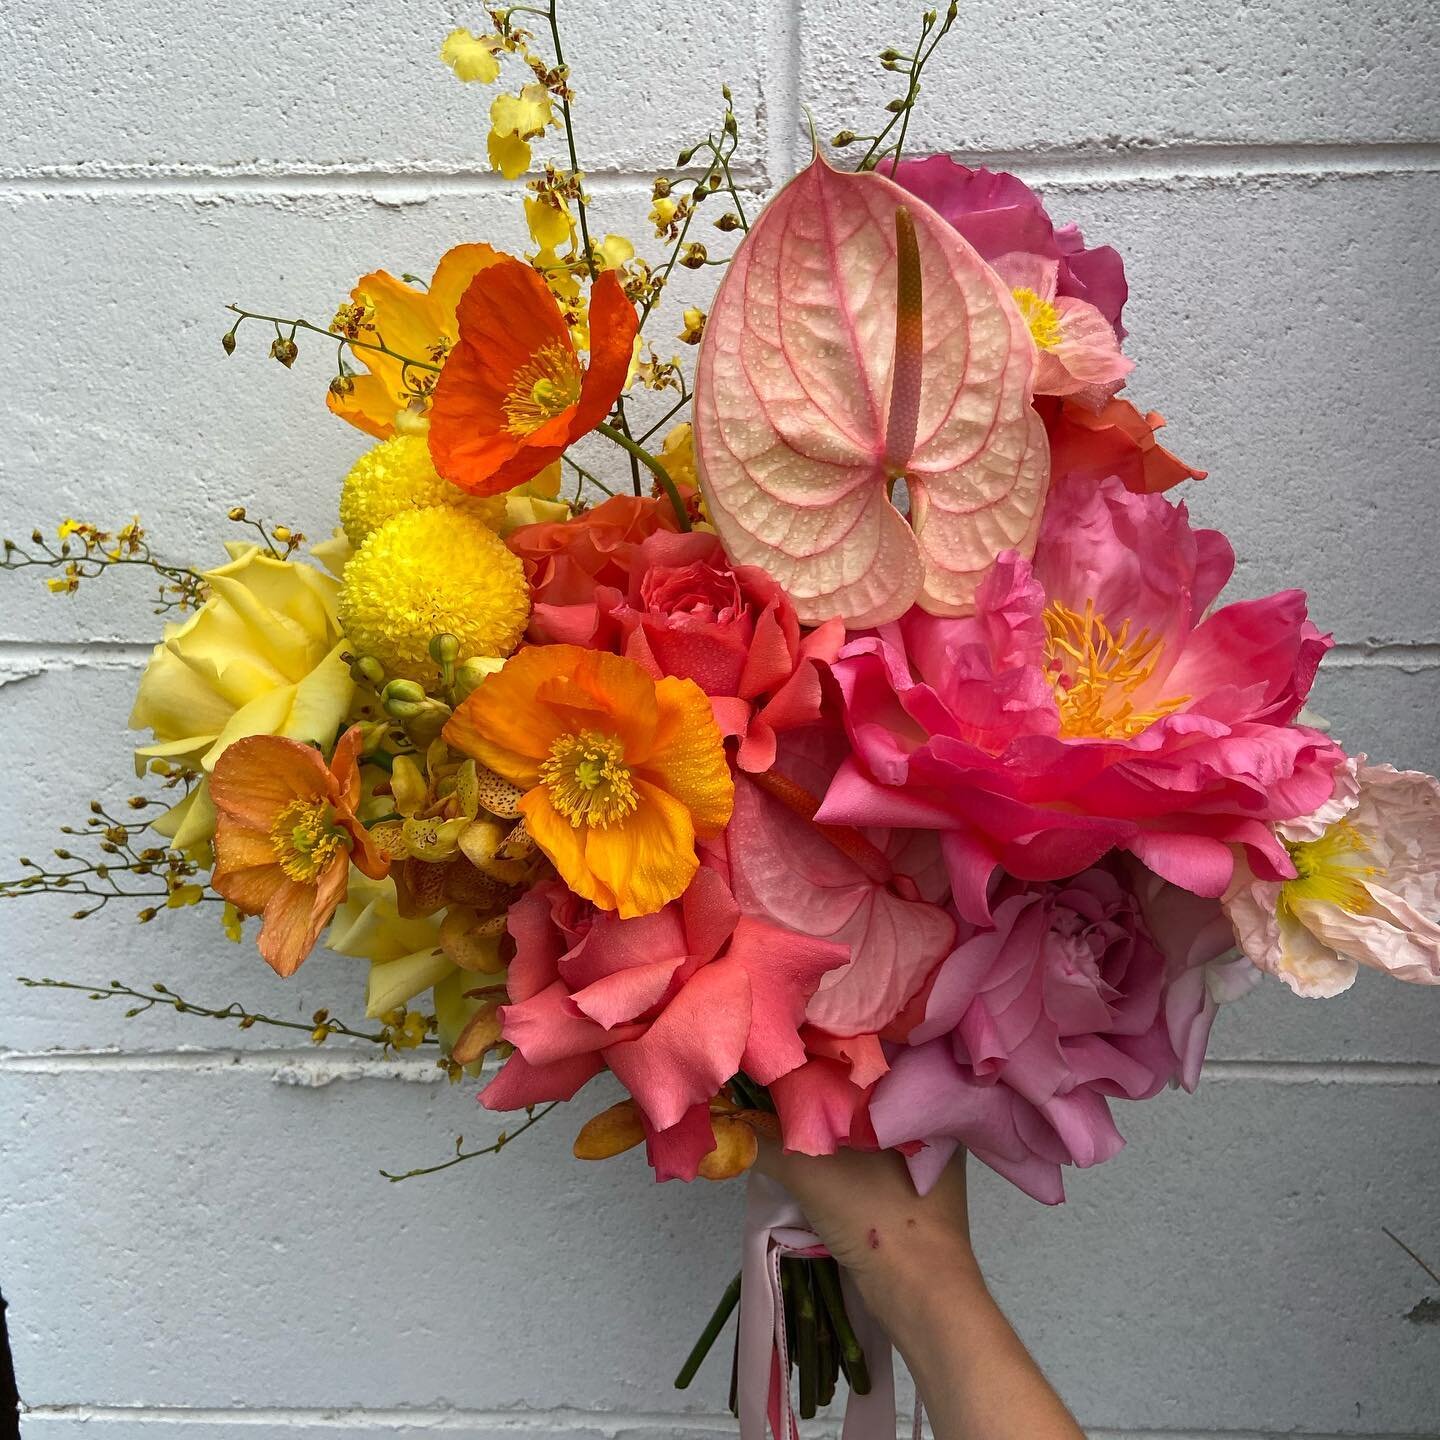 These beauties for Danika + Alistair 🌞

Swipe 👈🏽 to see this bouquet turned into beautiful forever art by @bridgetandhaze ❤️
.
.
.
.
.
.
.
#fleursociete #weddingbouquet #perthflorist #perthisok #perthflowers #instaflowers #floristsofinstagram #per